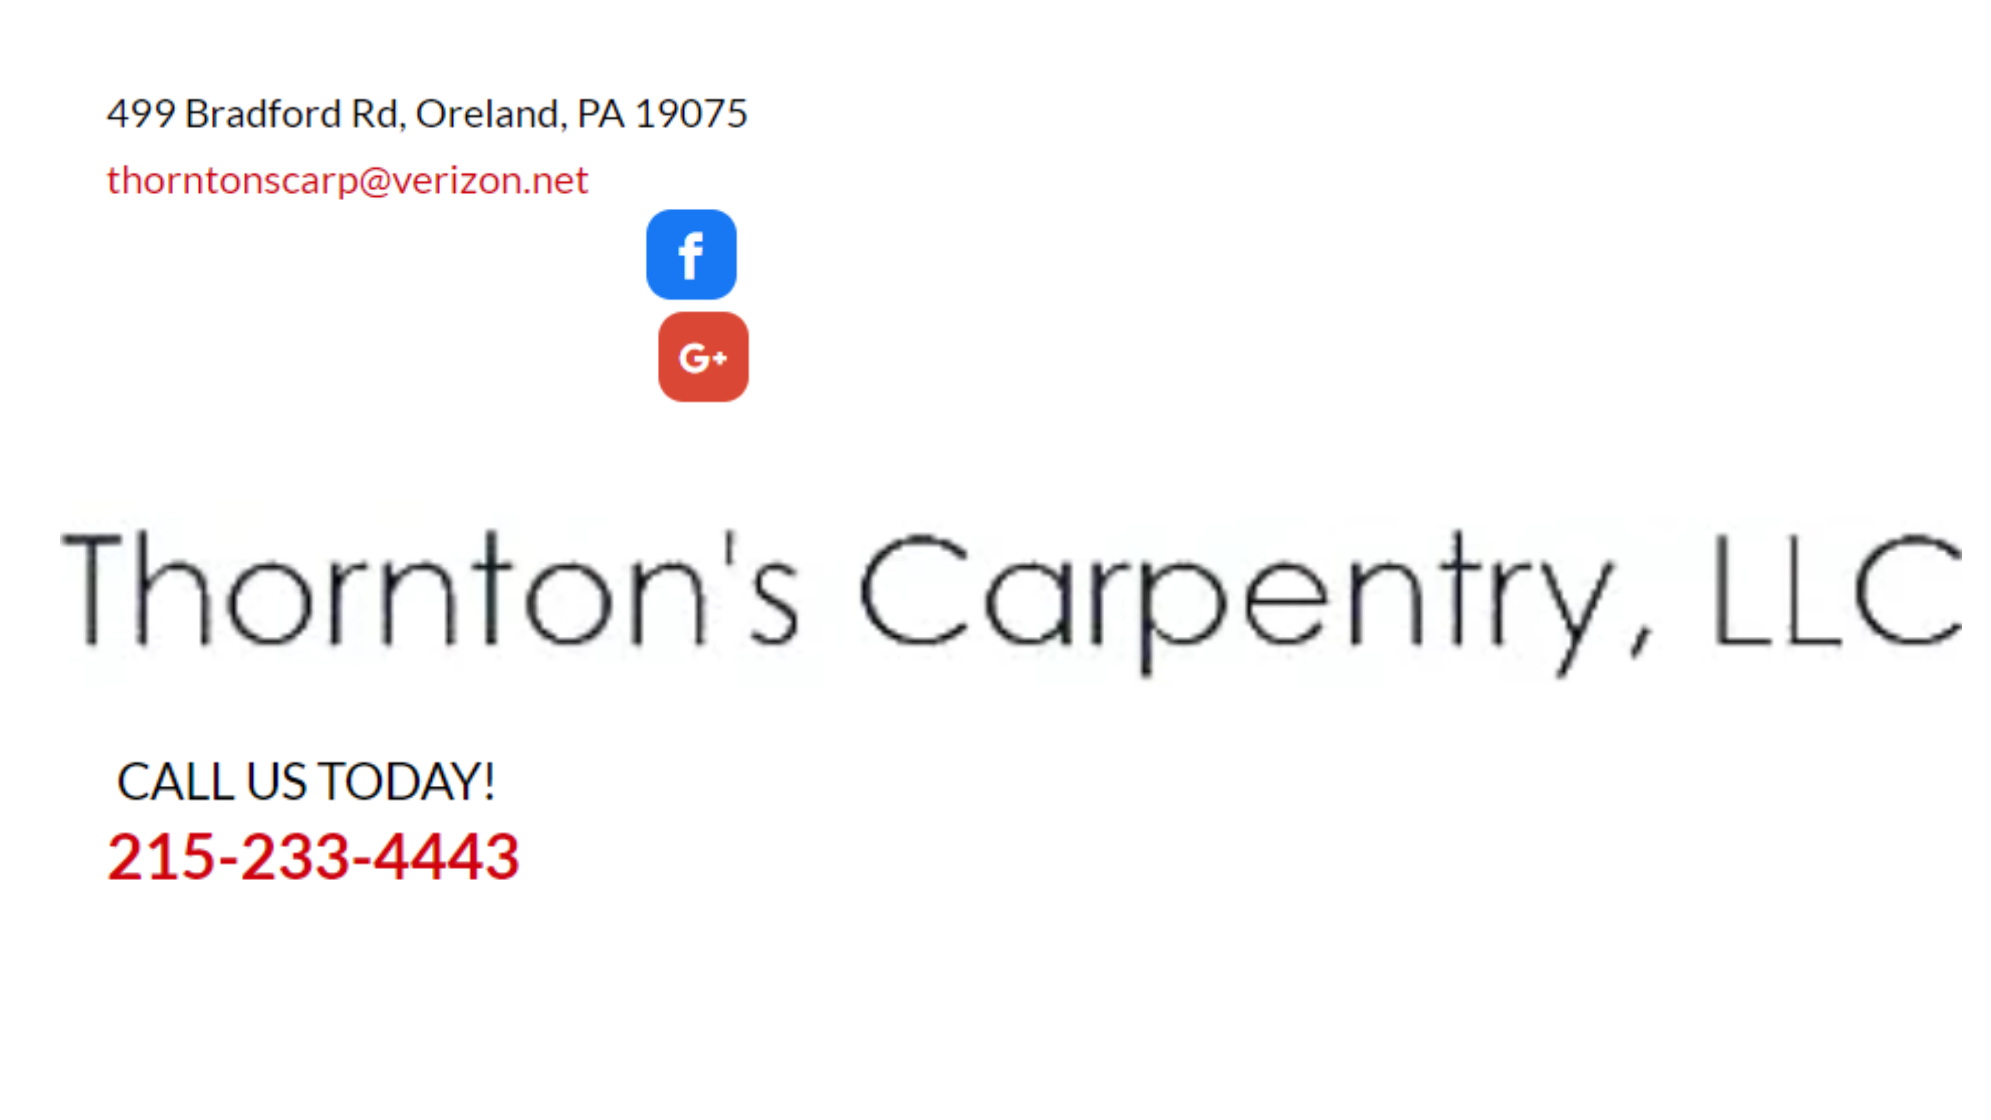 Thornton's Carpentry LLC 499 Bradford Rd, Oreland Pennsylvania 19075